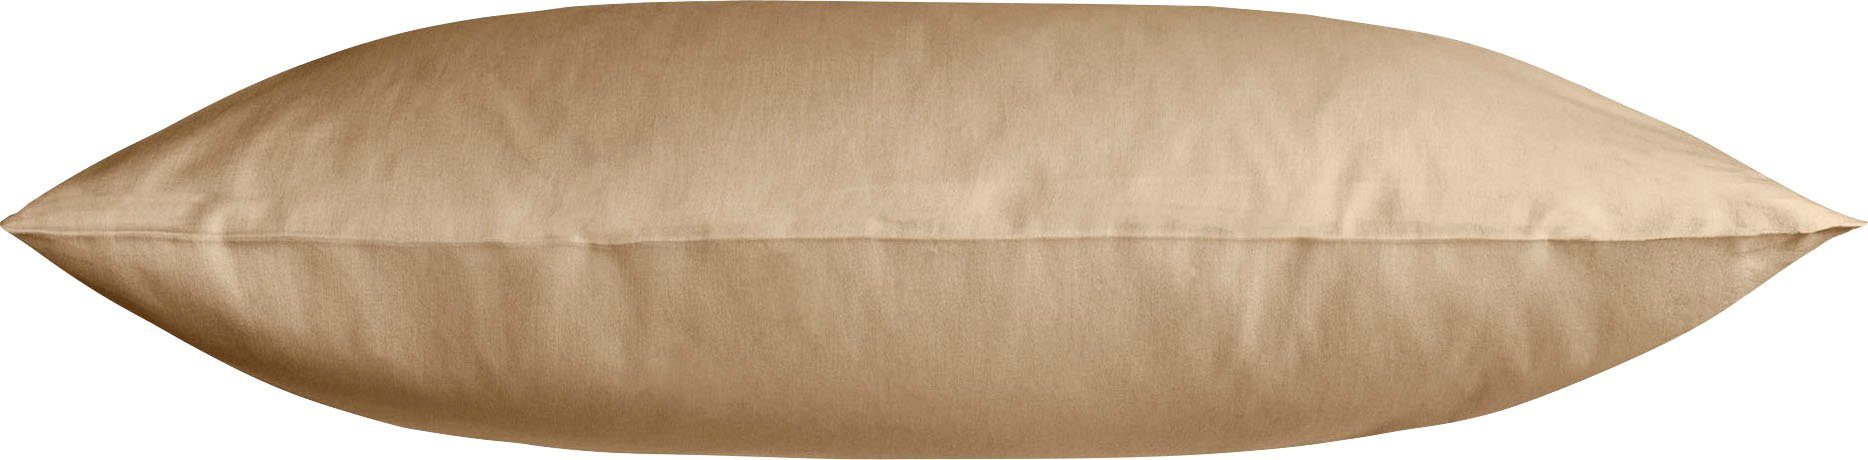 Kissenbezug Edel-Satin Uni, Kneer (1 Stück), aus mercerisierter Baumwolle